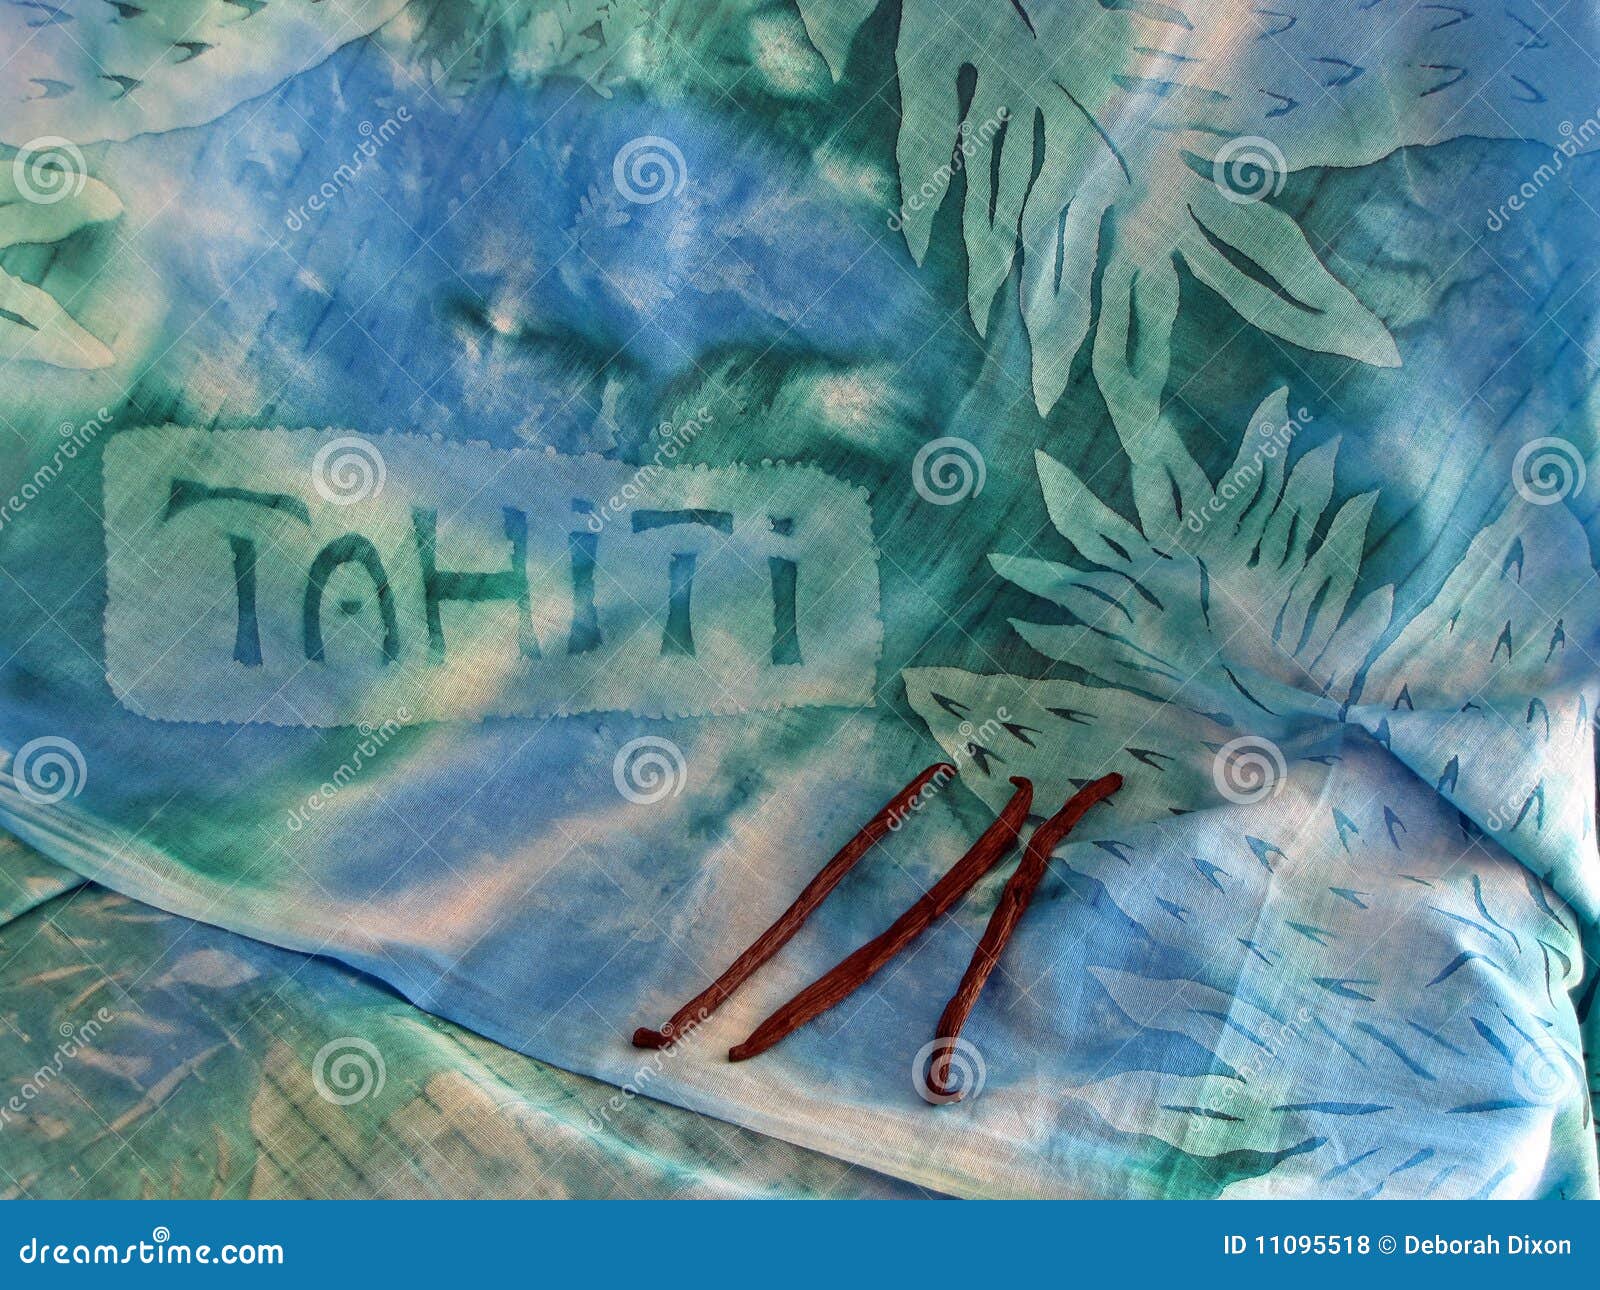 dreaming of tahiti